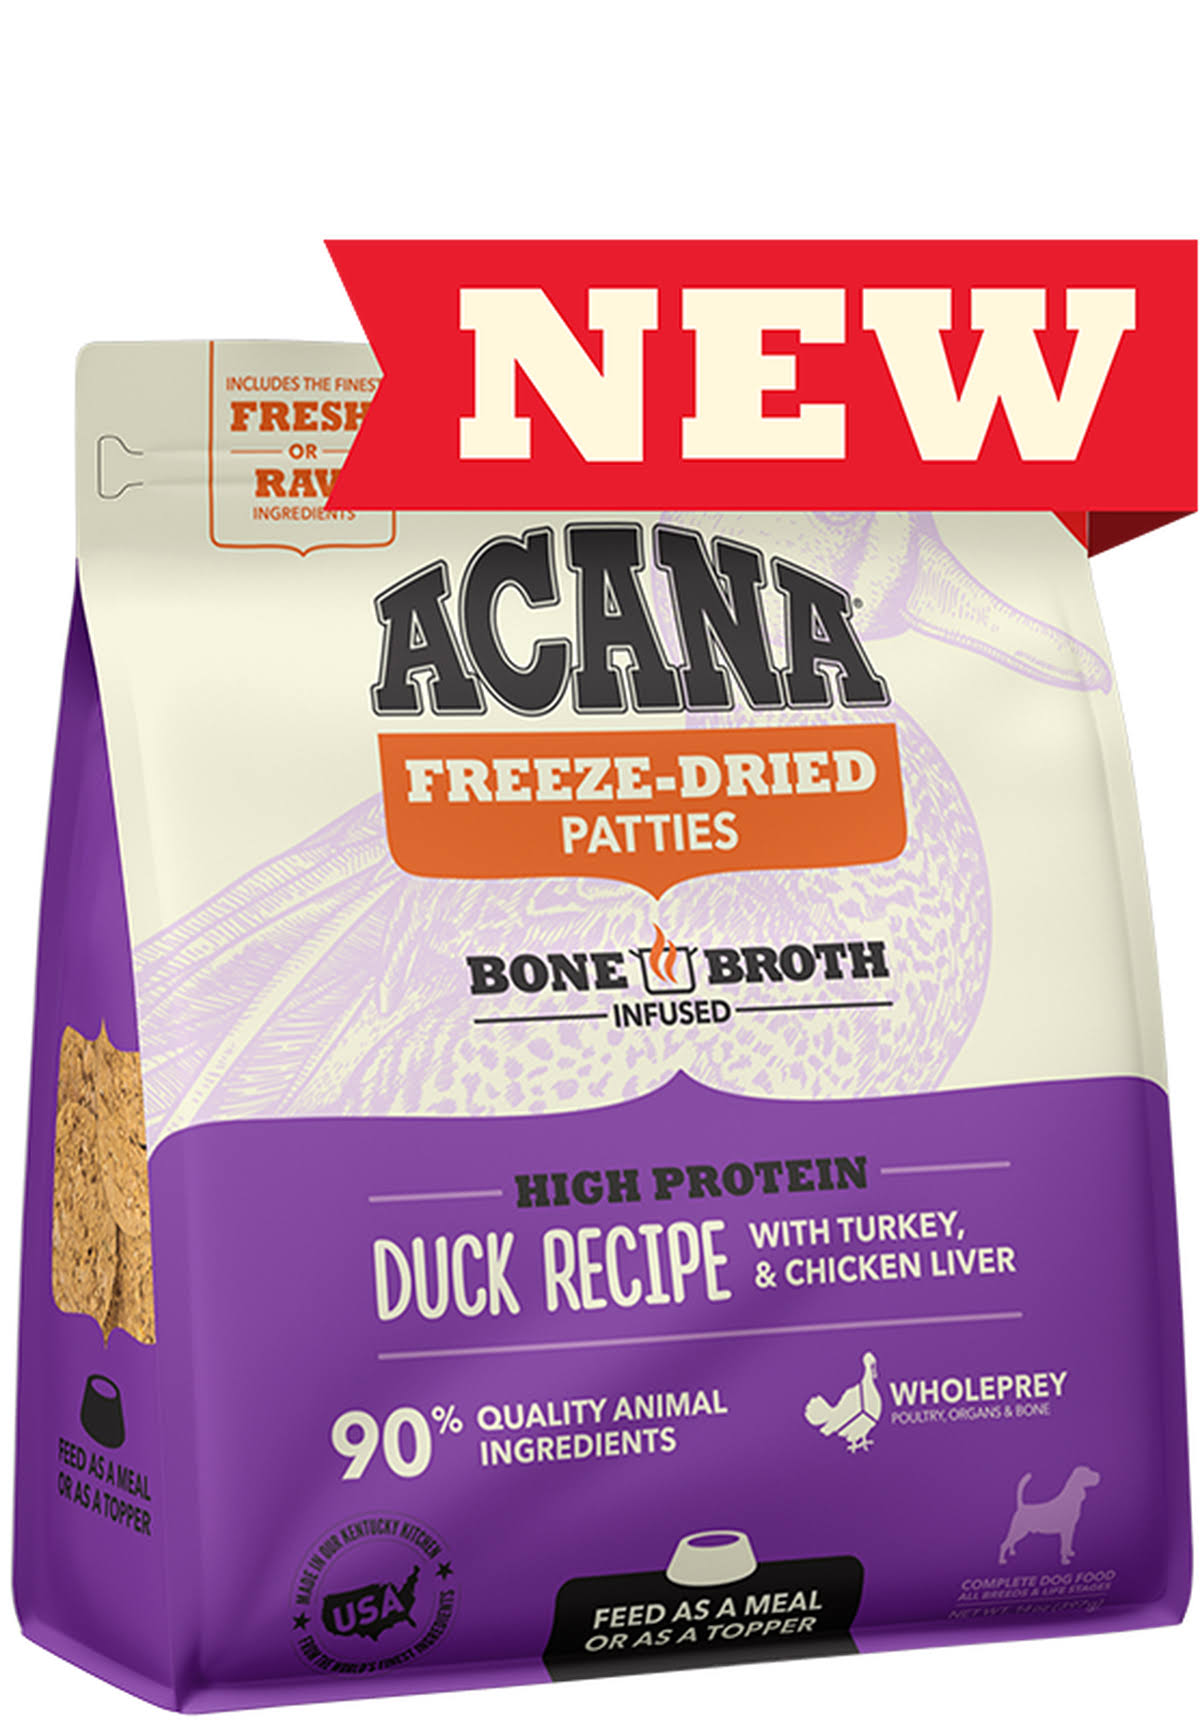 Acana Freeze-Dried Patties Dog Food - Duck Recipe - 14 oz. Bag